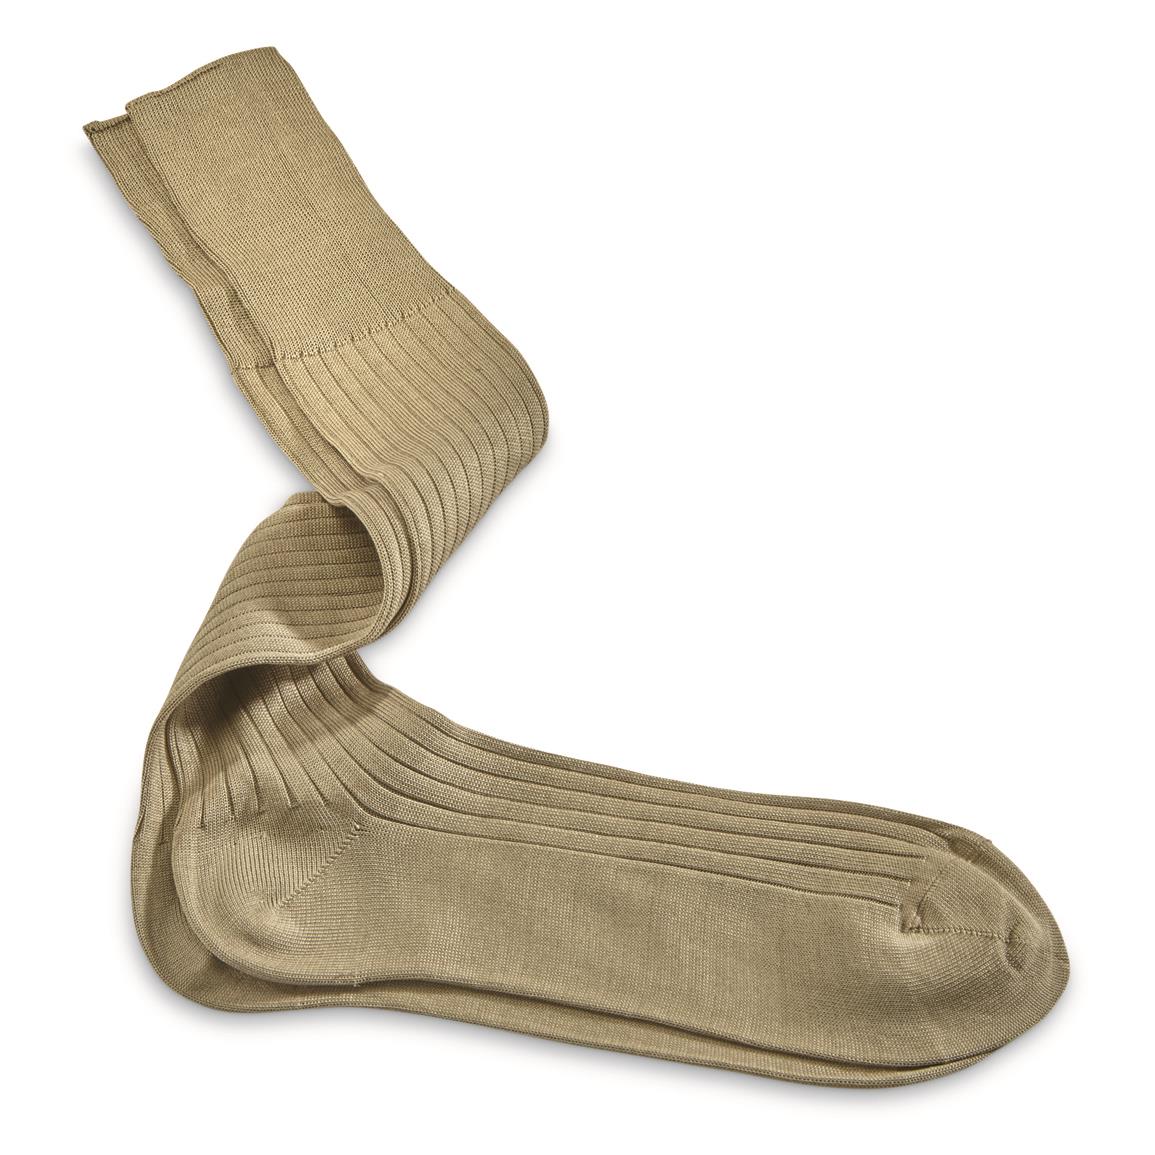 Italian Military Surplus Cotton Dress Socks, 6 Pairs, New, Olive Drab